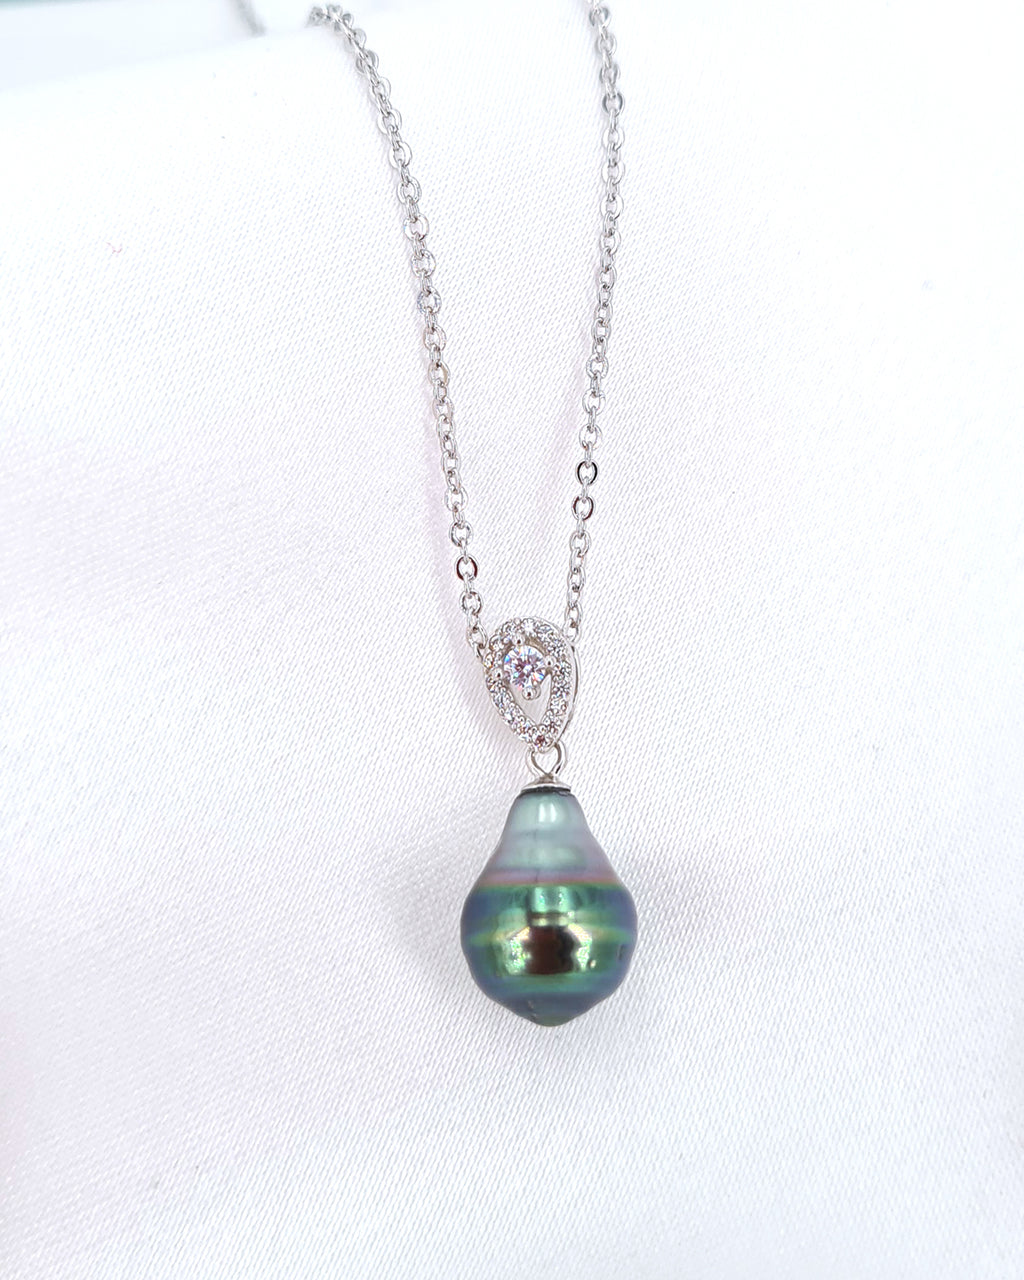 Tahitian Pearl Pendant Necklace - Classy Peacock Green Teardrop Sea Pearl Jewelry